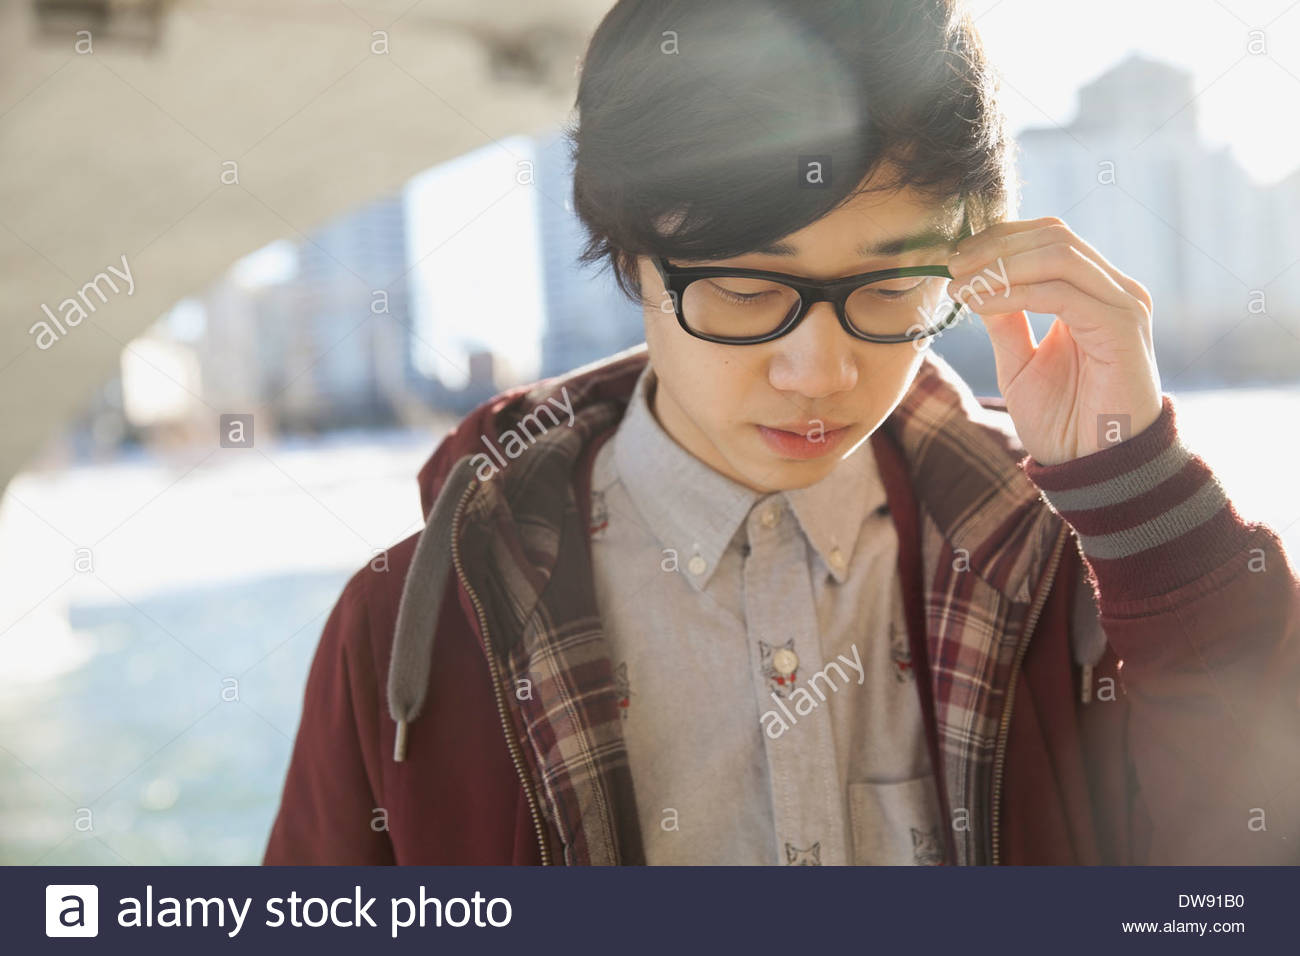 Young man adjusting eyeglasses outdoors Stock Photo